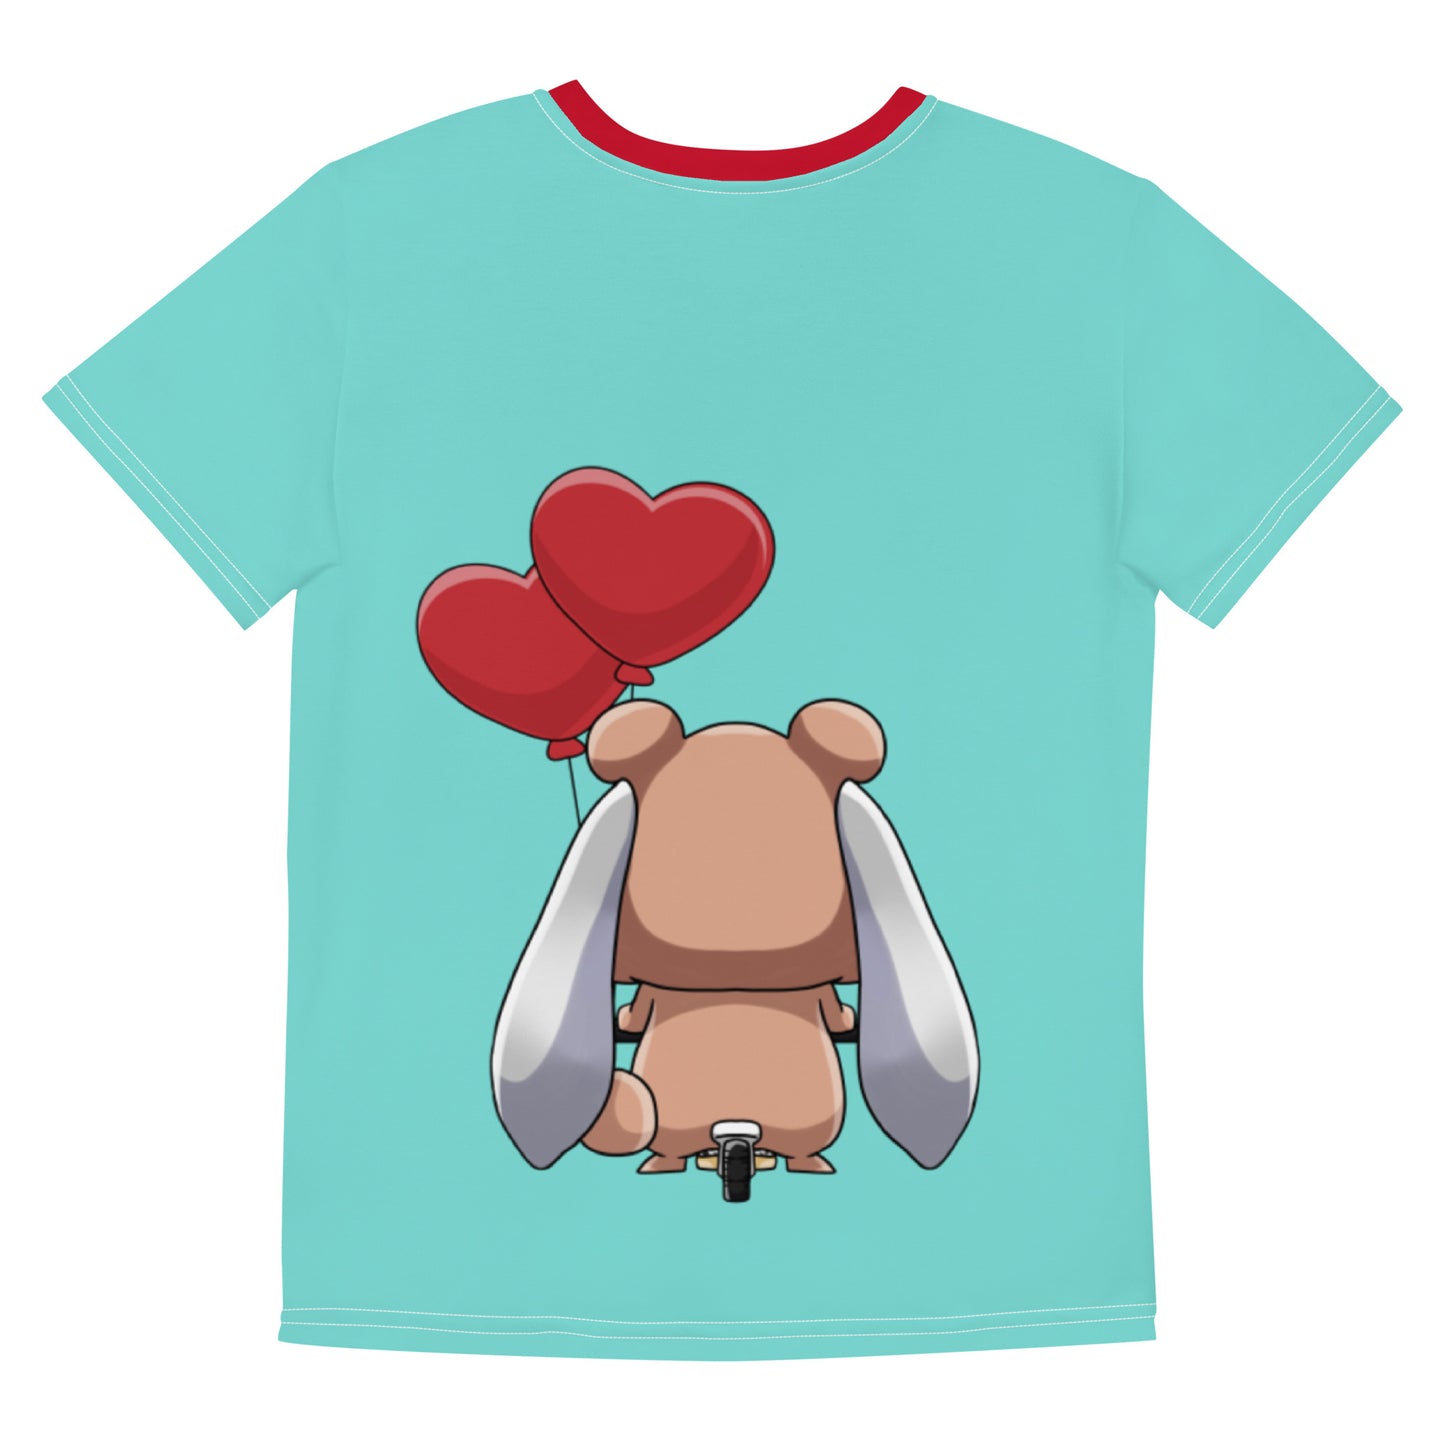 SVOLTA Kawaii Rebel Love Bear Front+Back Print T-shirt in Aqua, 8-20 - Kids/Youth